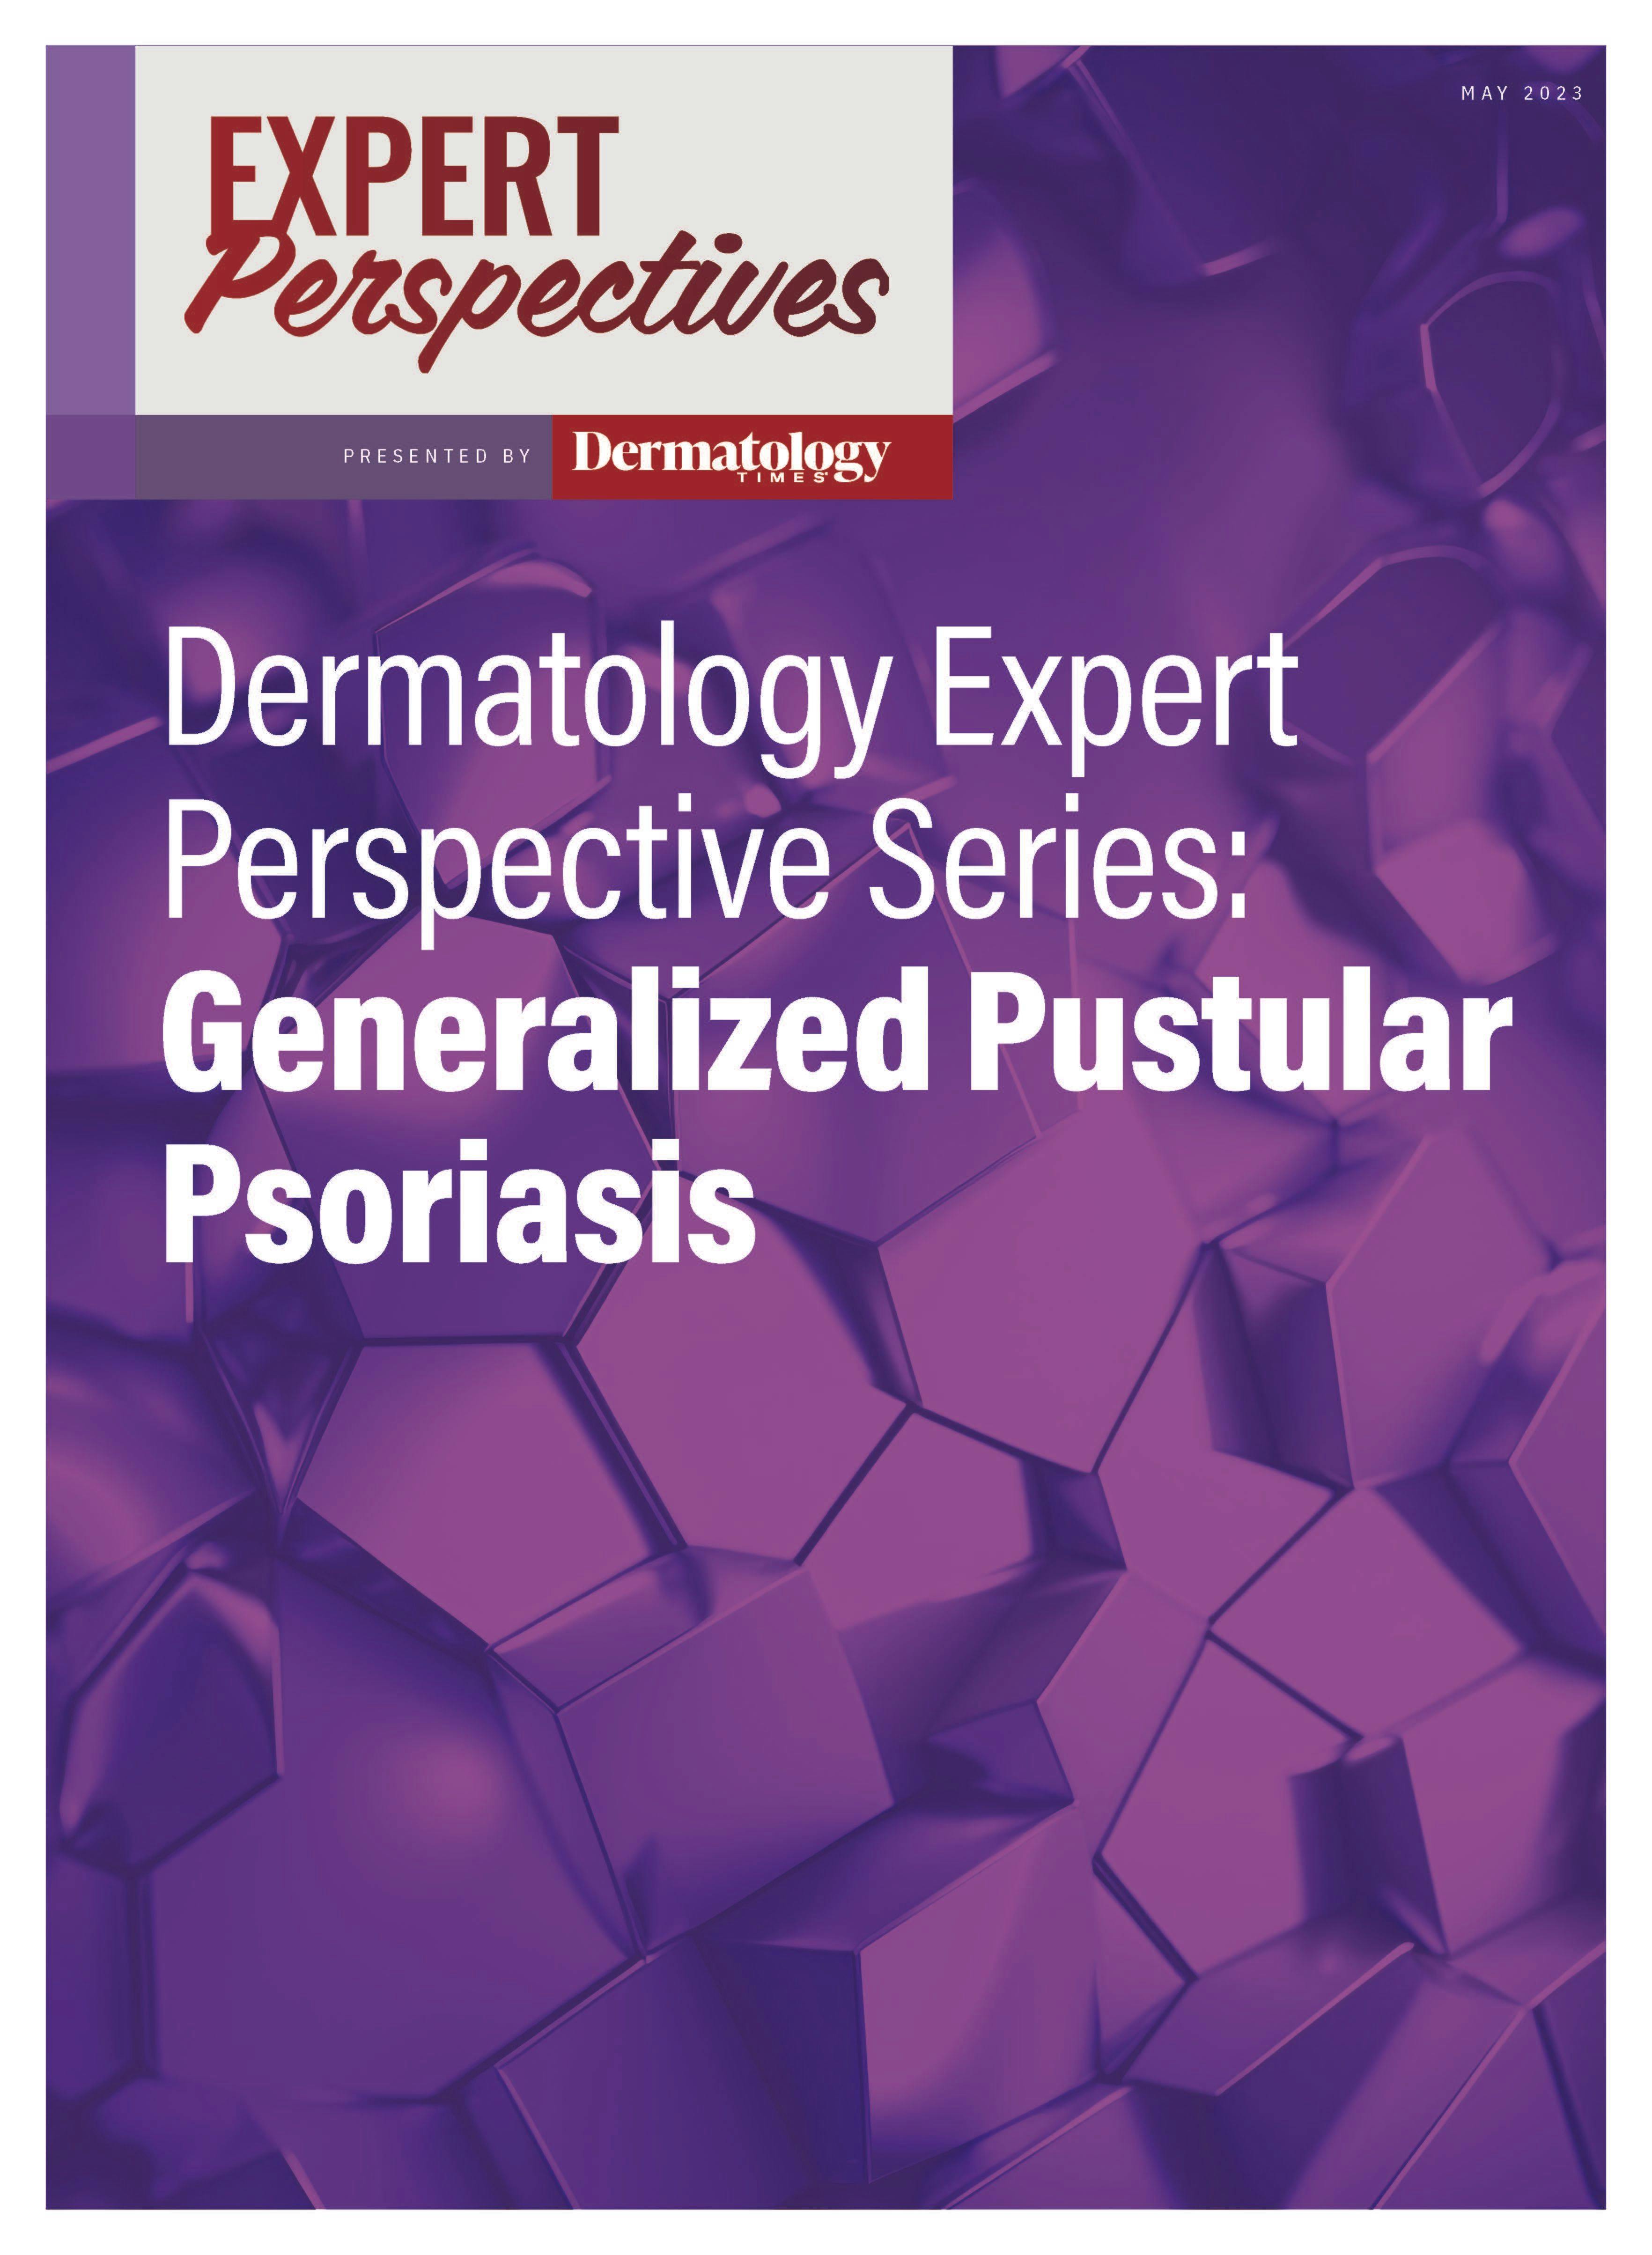 Dermatology Expert Perspective Series: Generalized Pustular Psoriasis